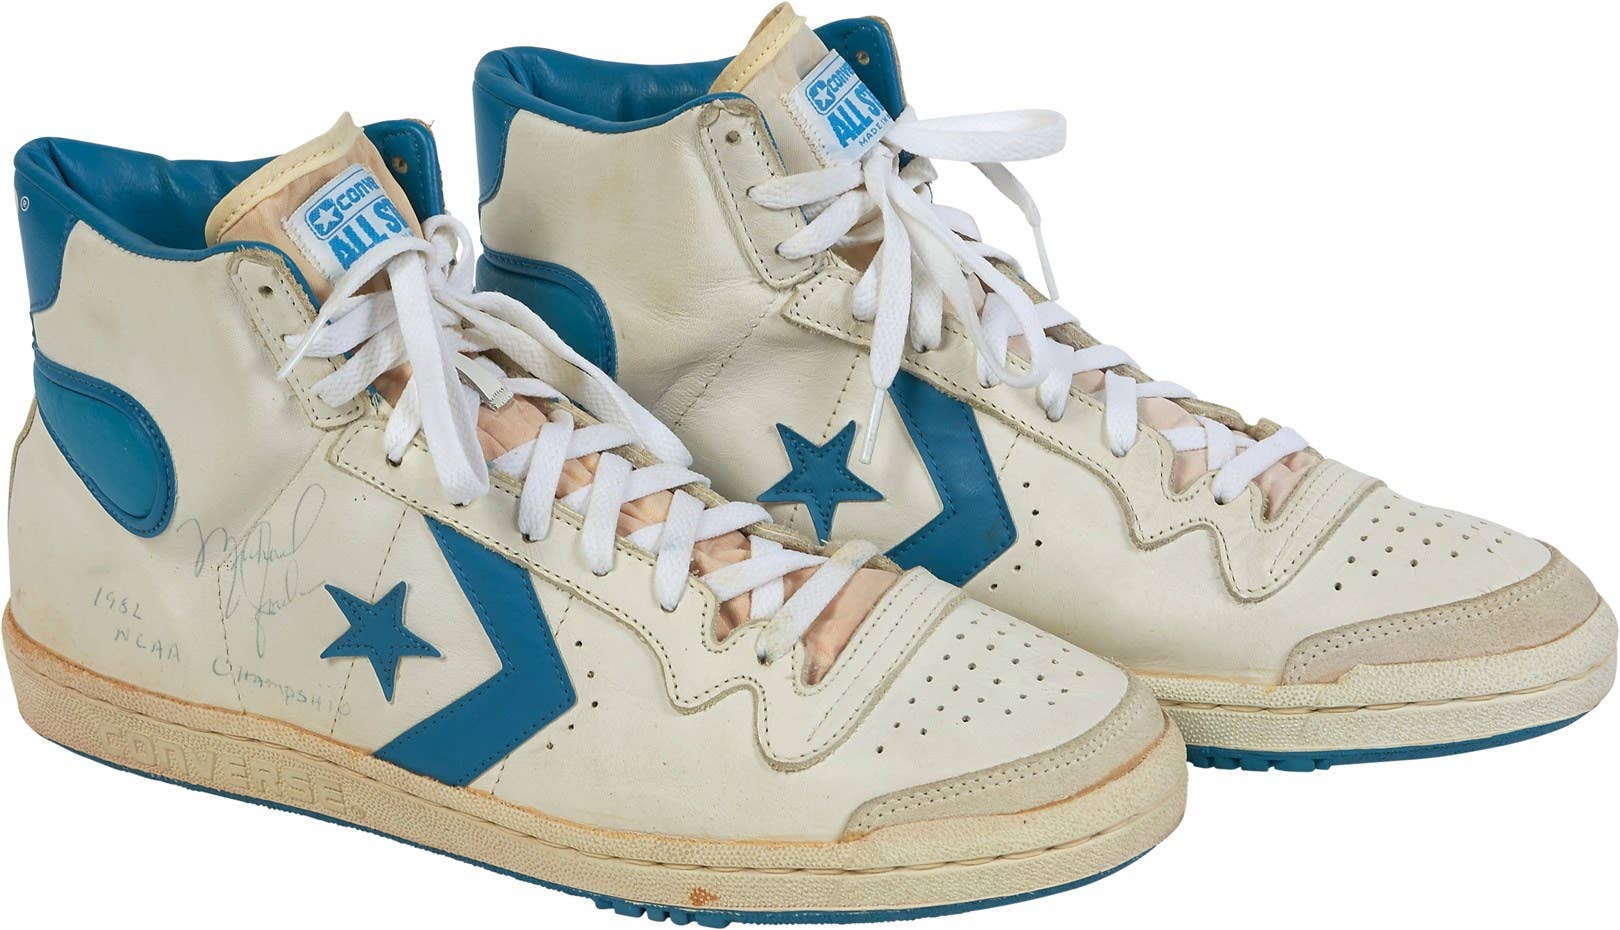 Converse sneakers Michael Jordan wore in the 1984 Olympics just